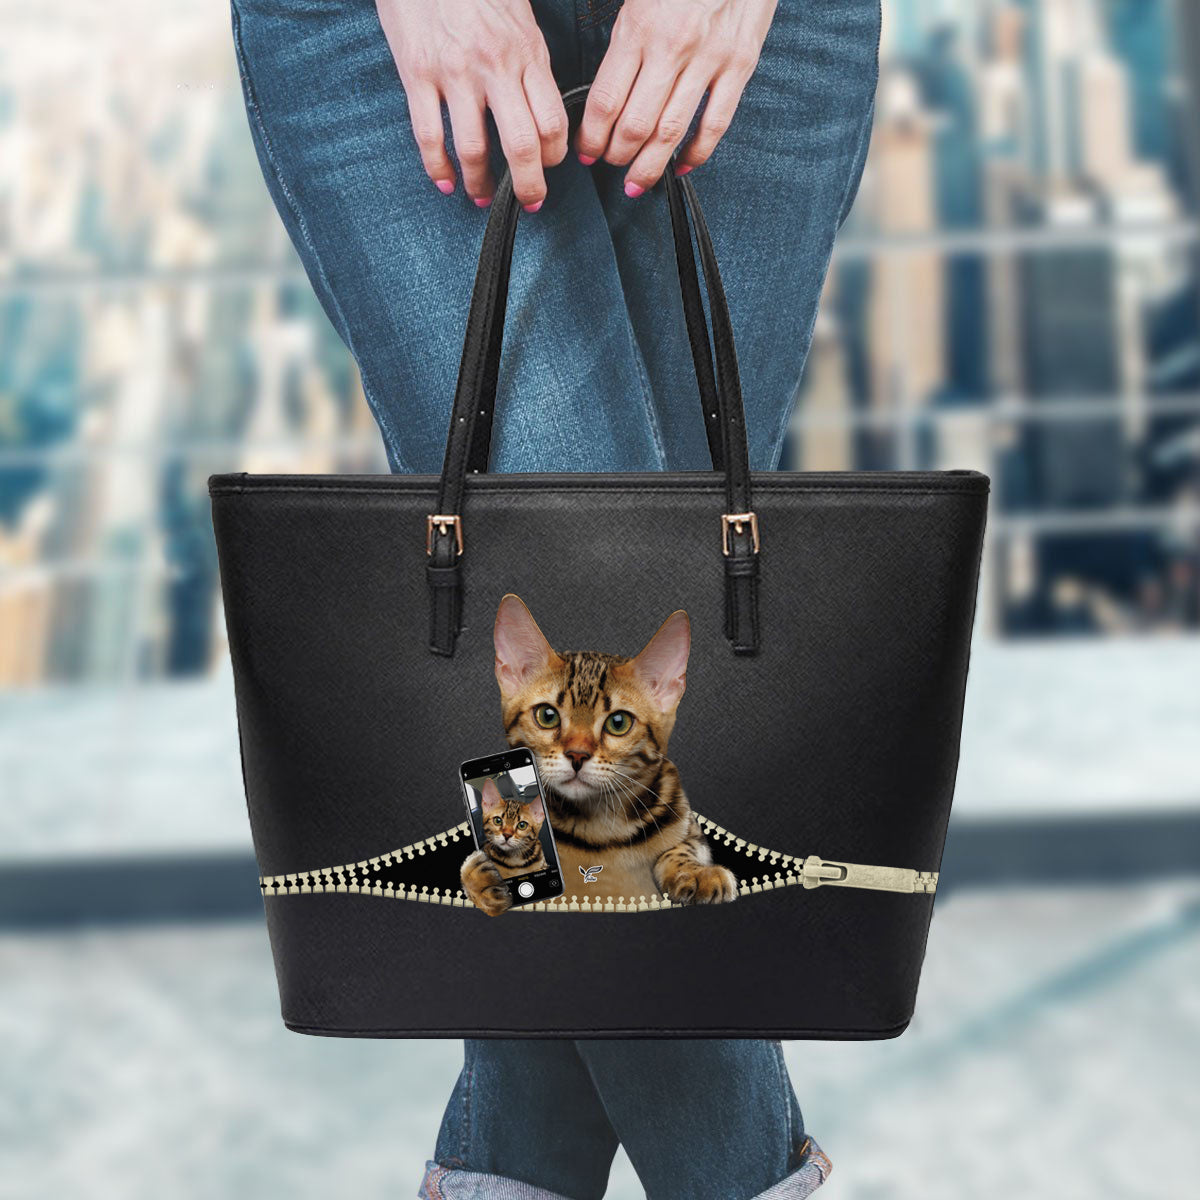 Do You Like My Selfie - Bengal Cat Tote Bag V1